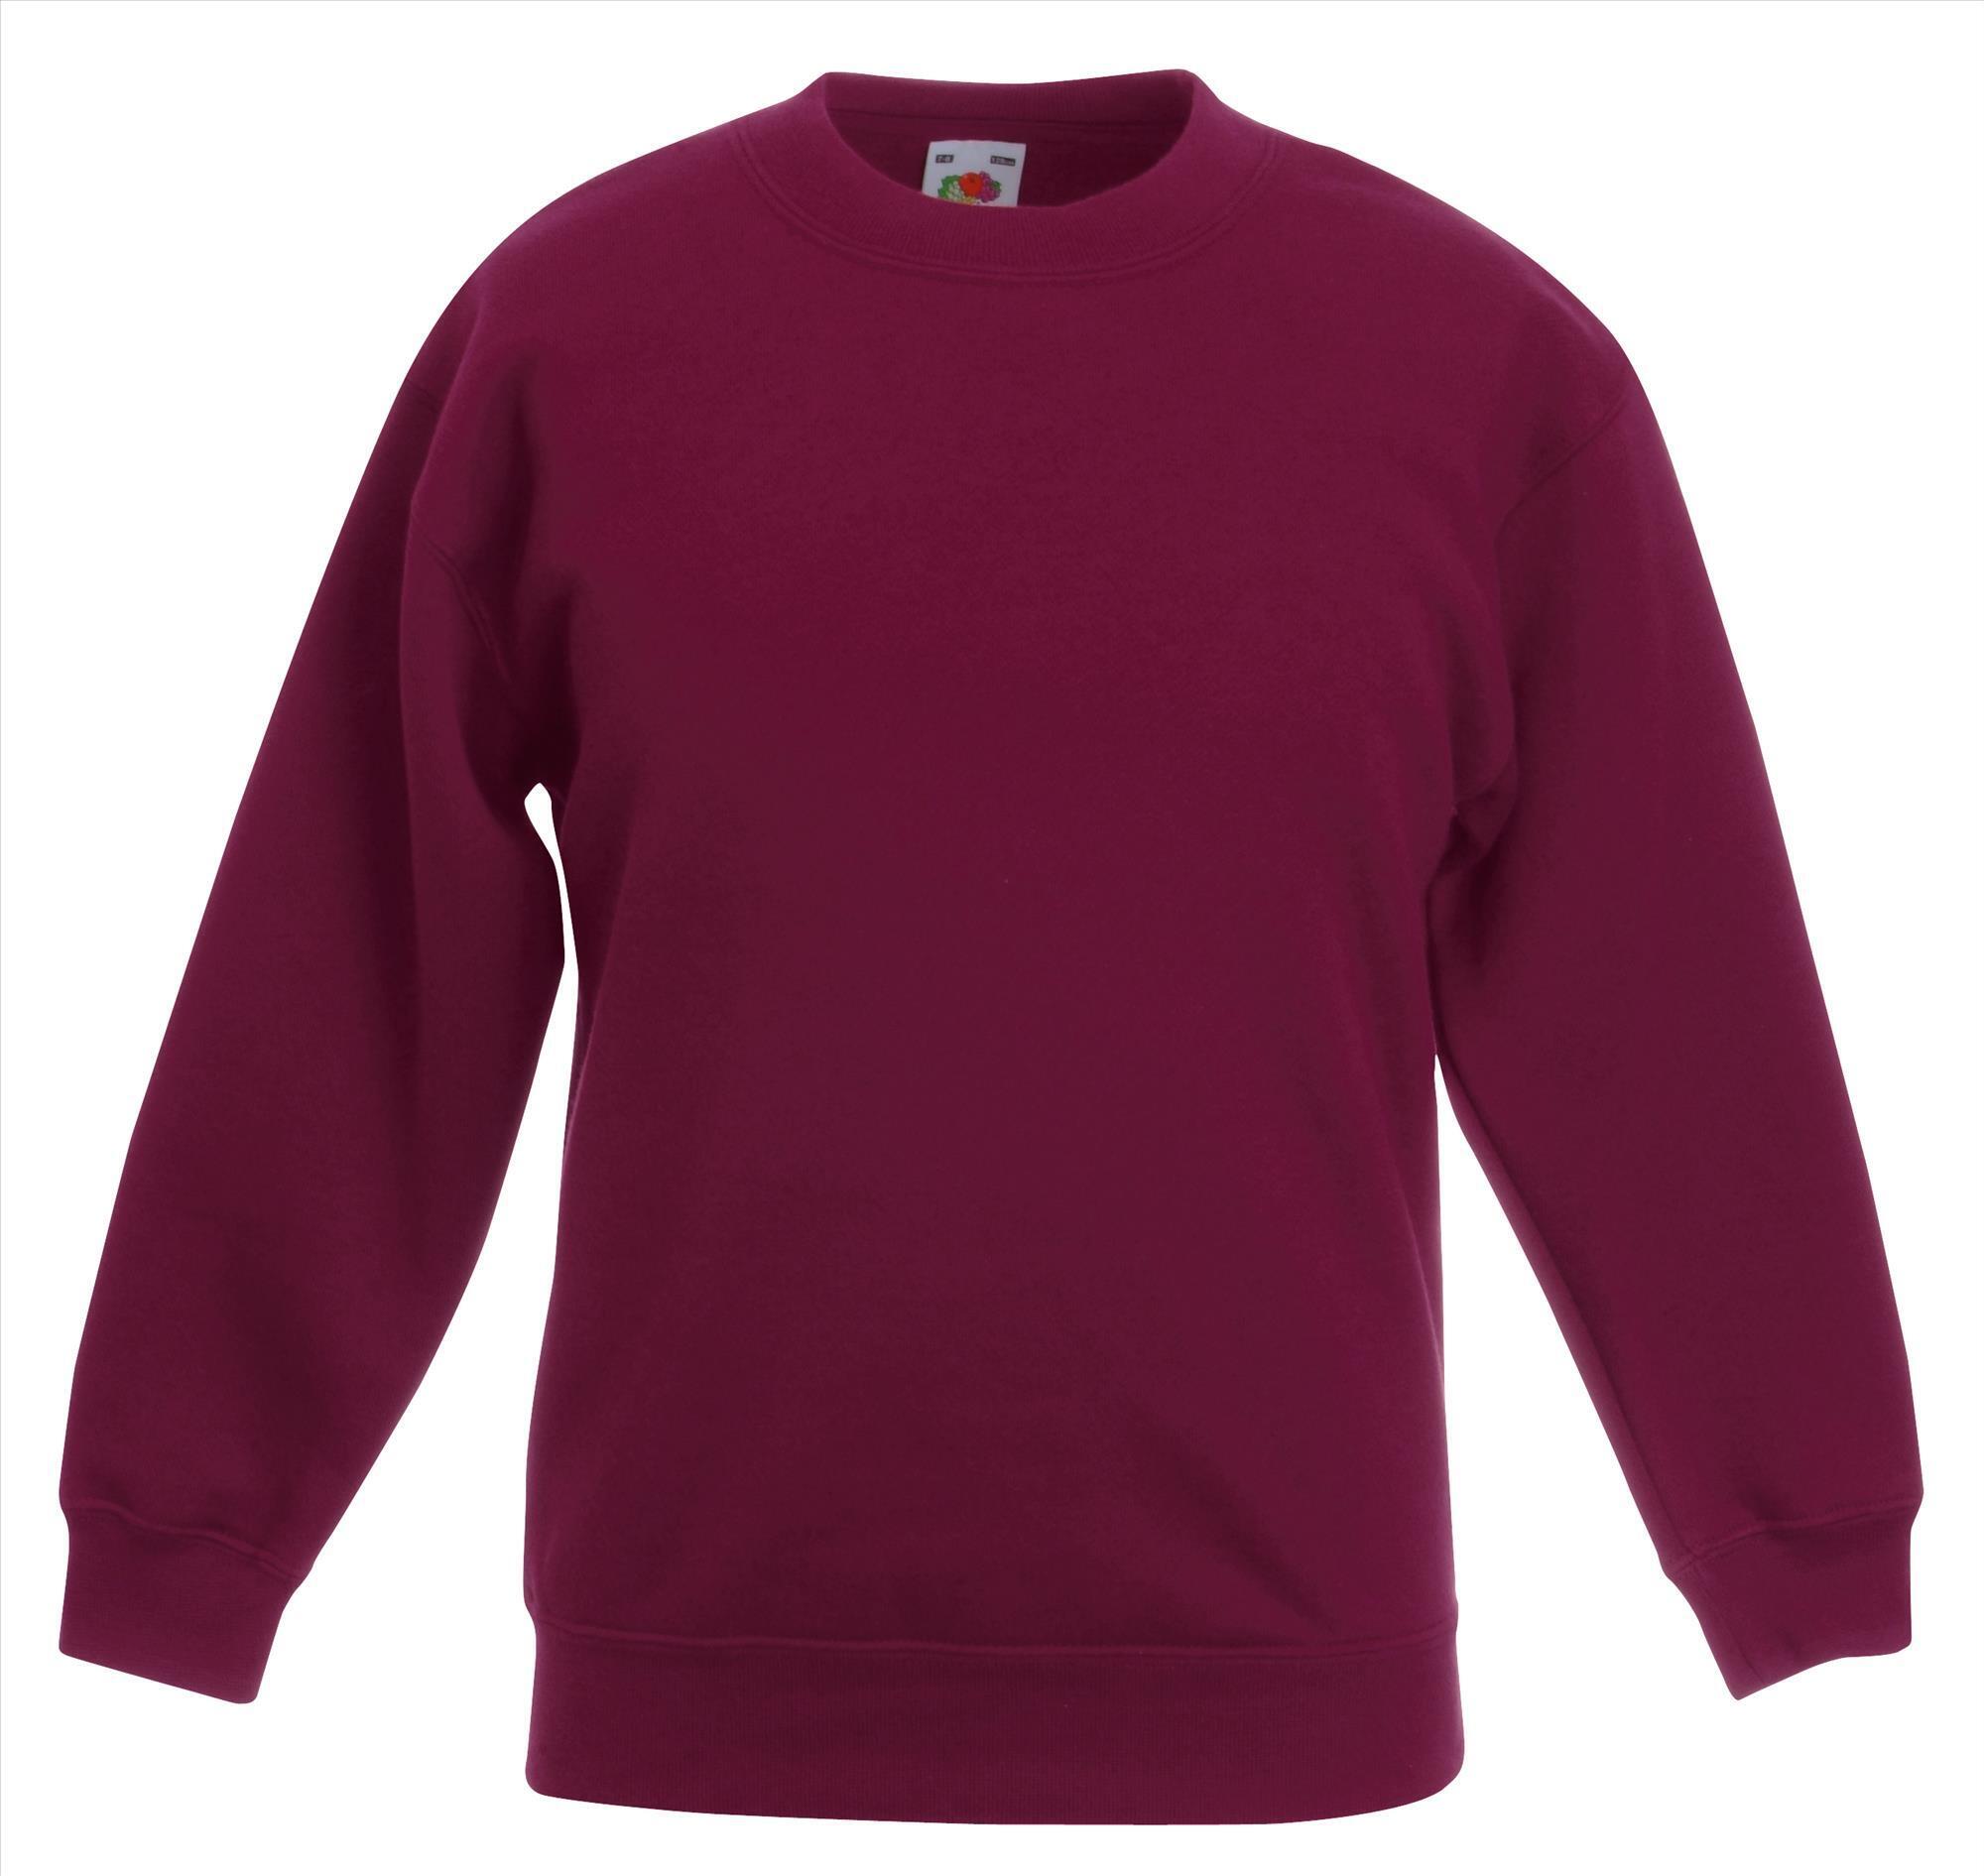 Burgundy rode kinder trui Kinder sweater Premium